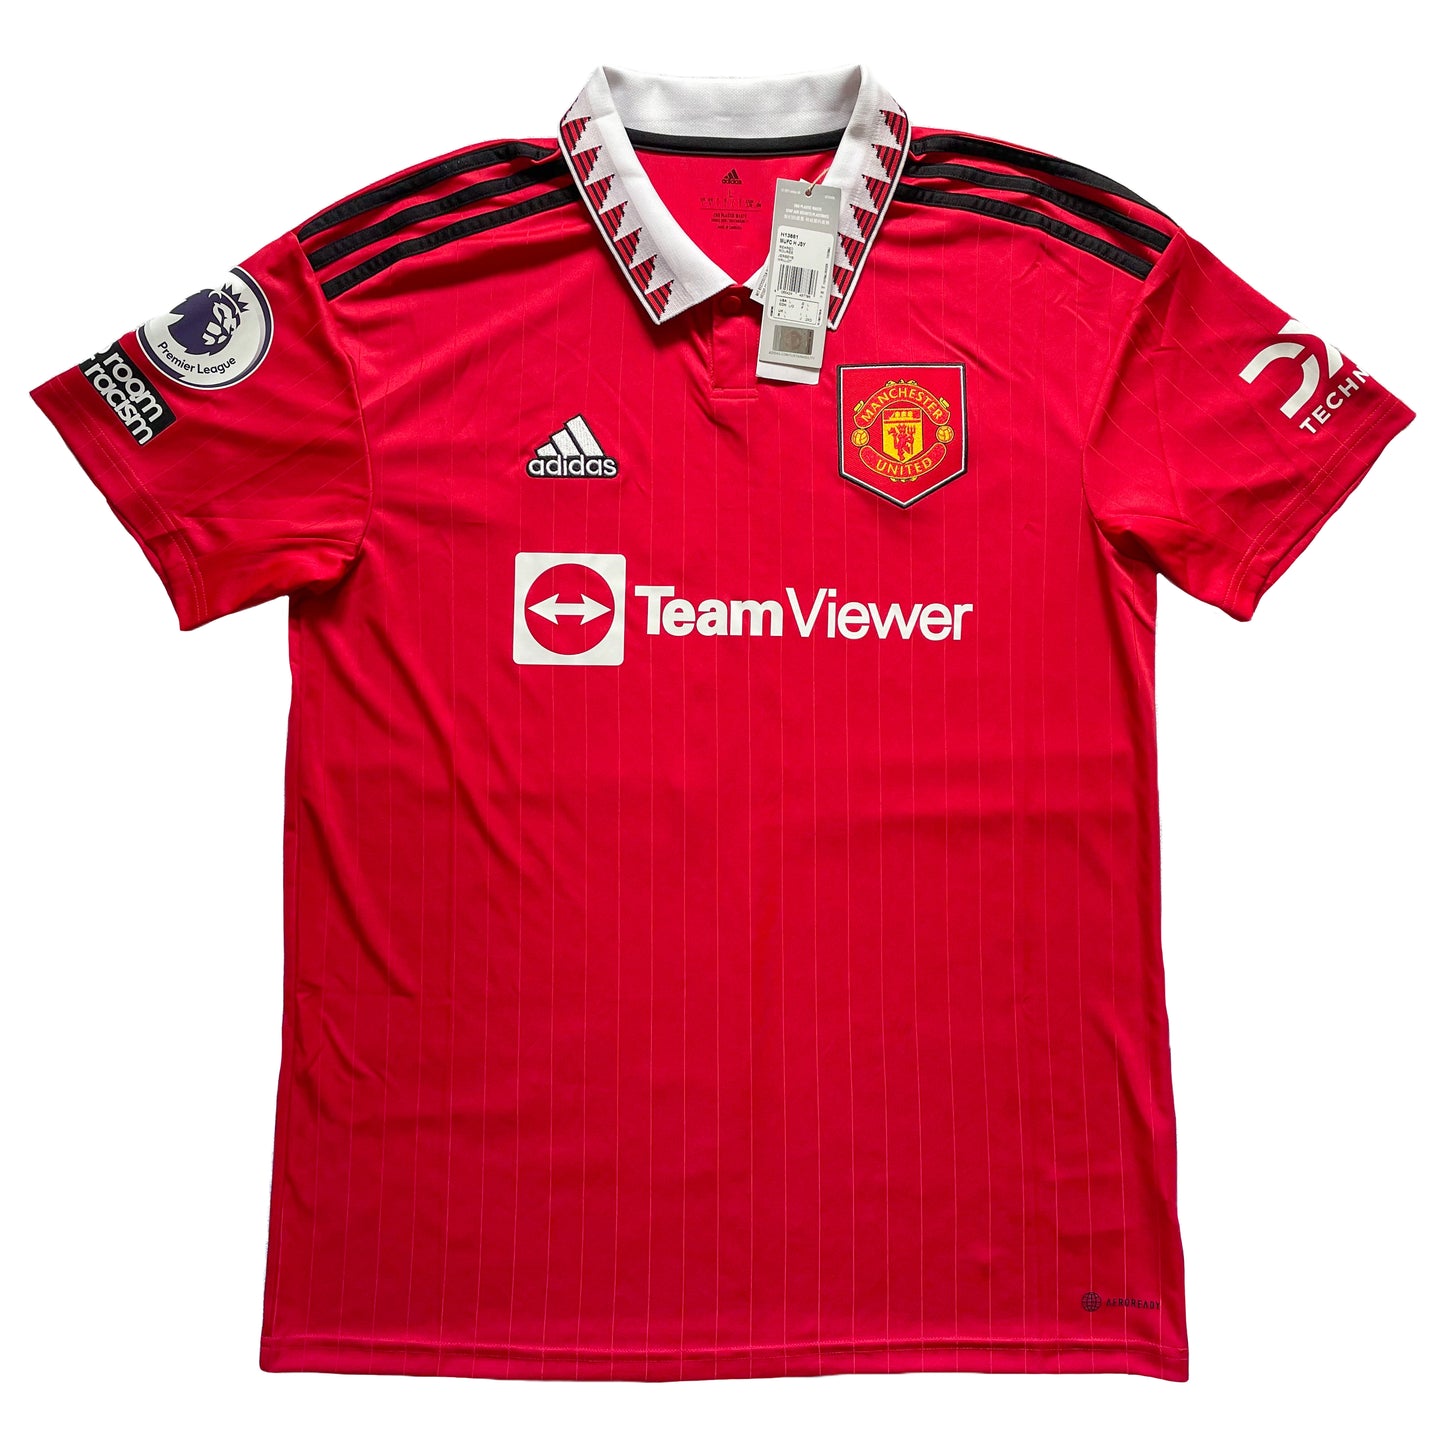 2022-2023 Manchester United FC home shirt #10 Rashford (S, M, L, XL)